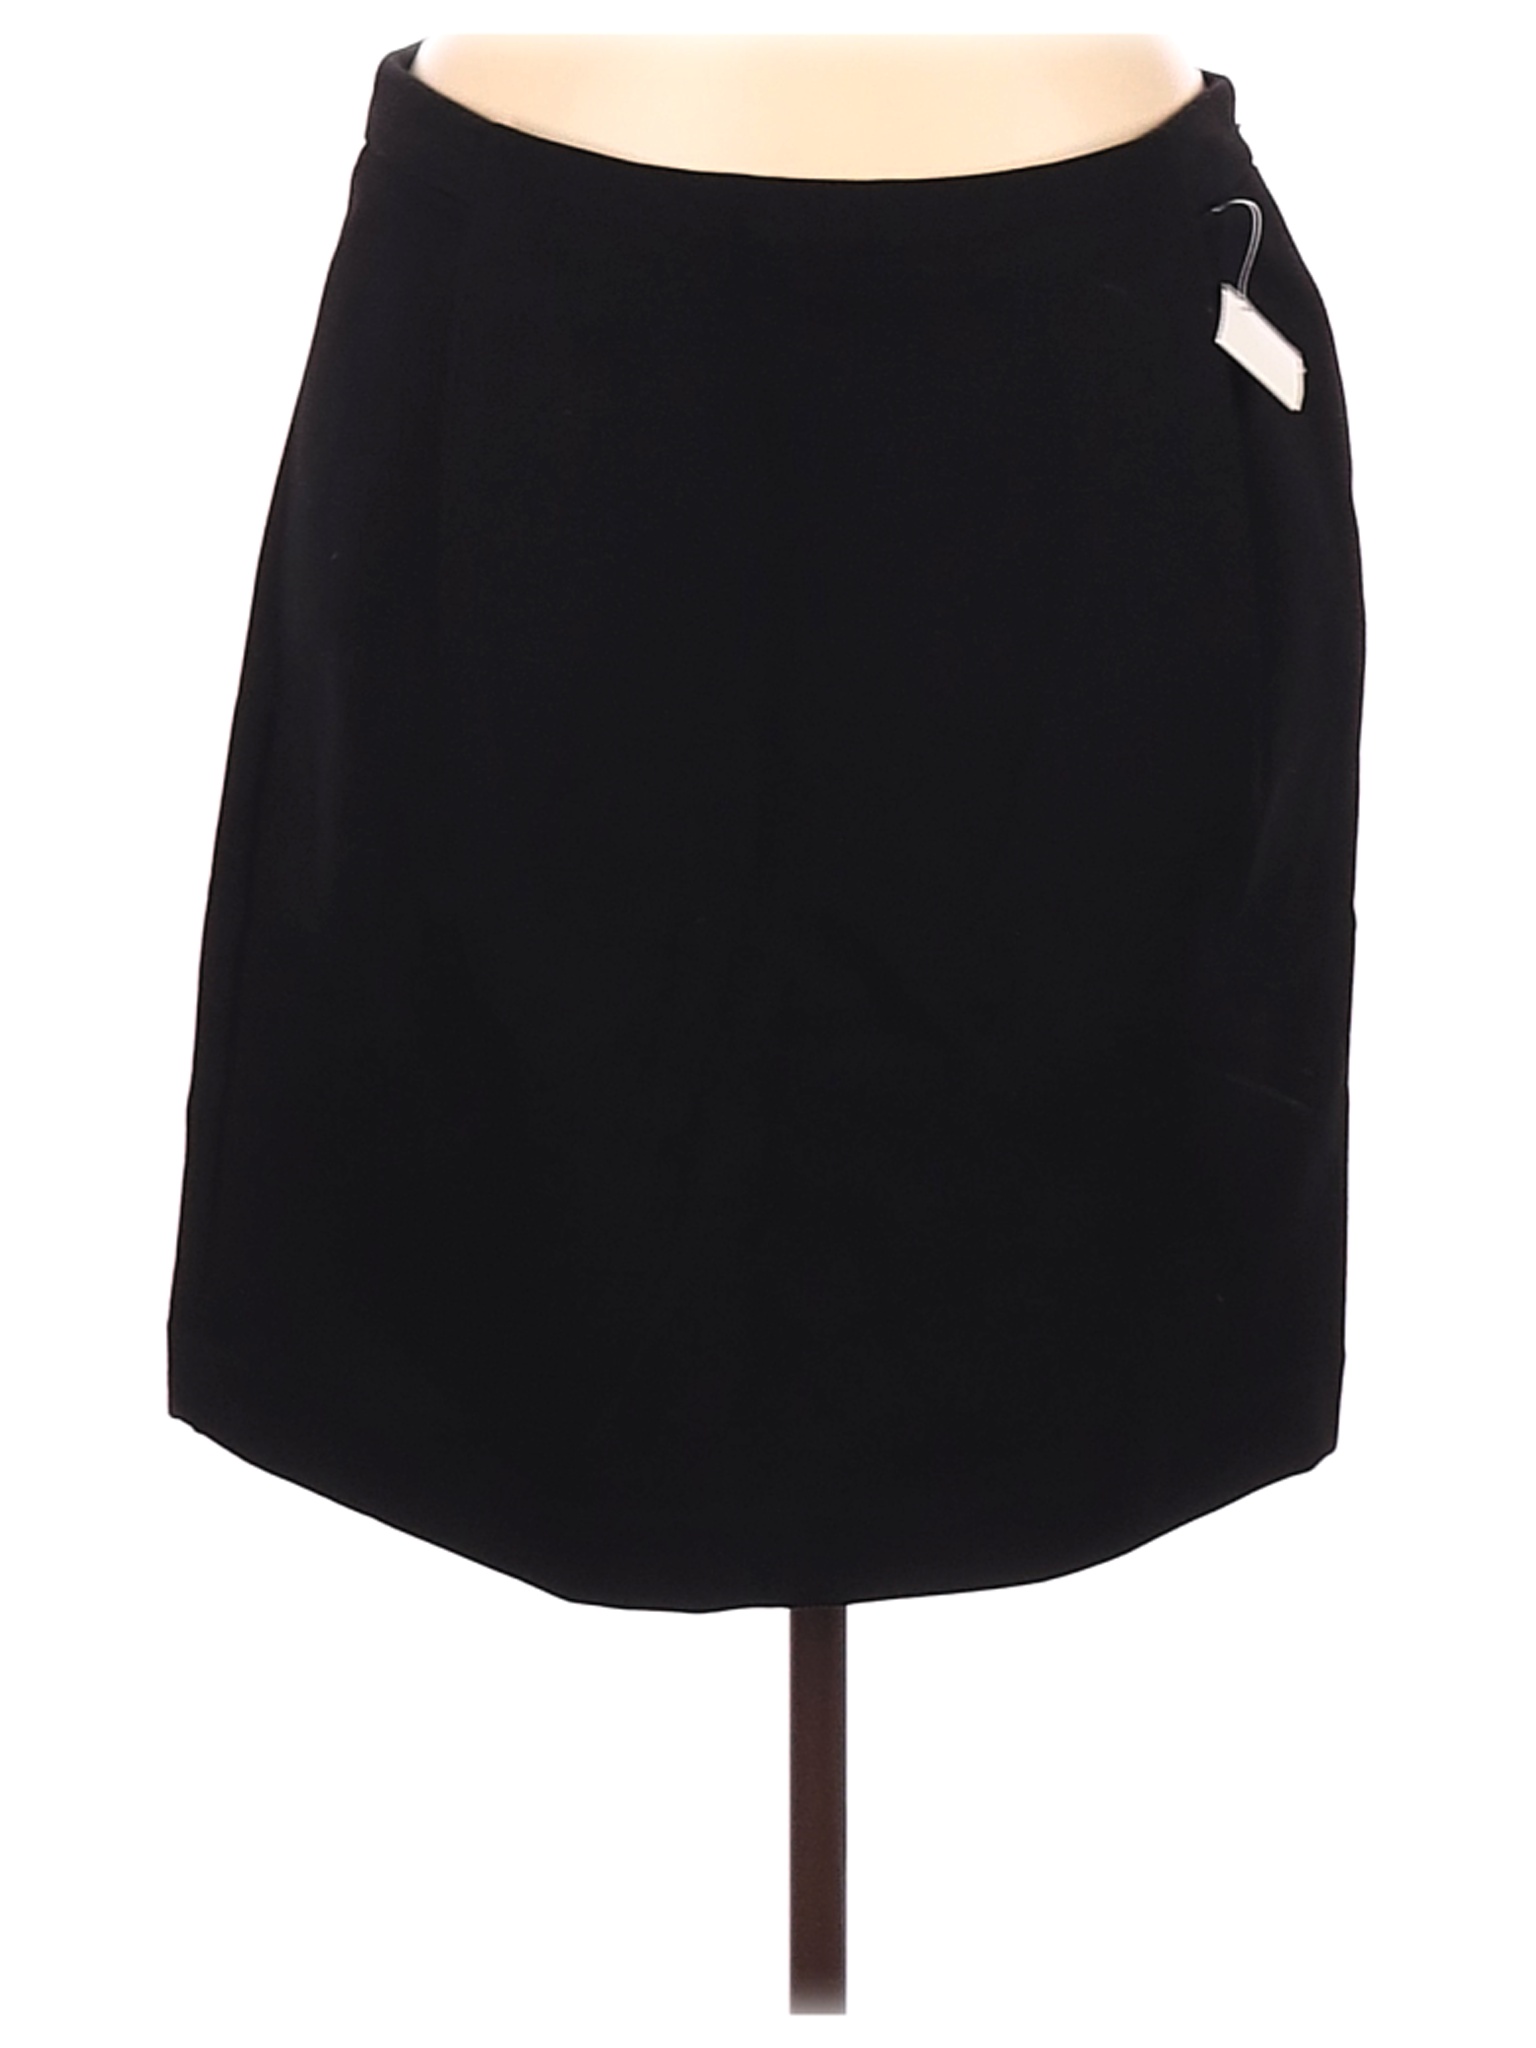 NWT Joe Fresh Women Black Casual Skirt 8 | eBay